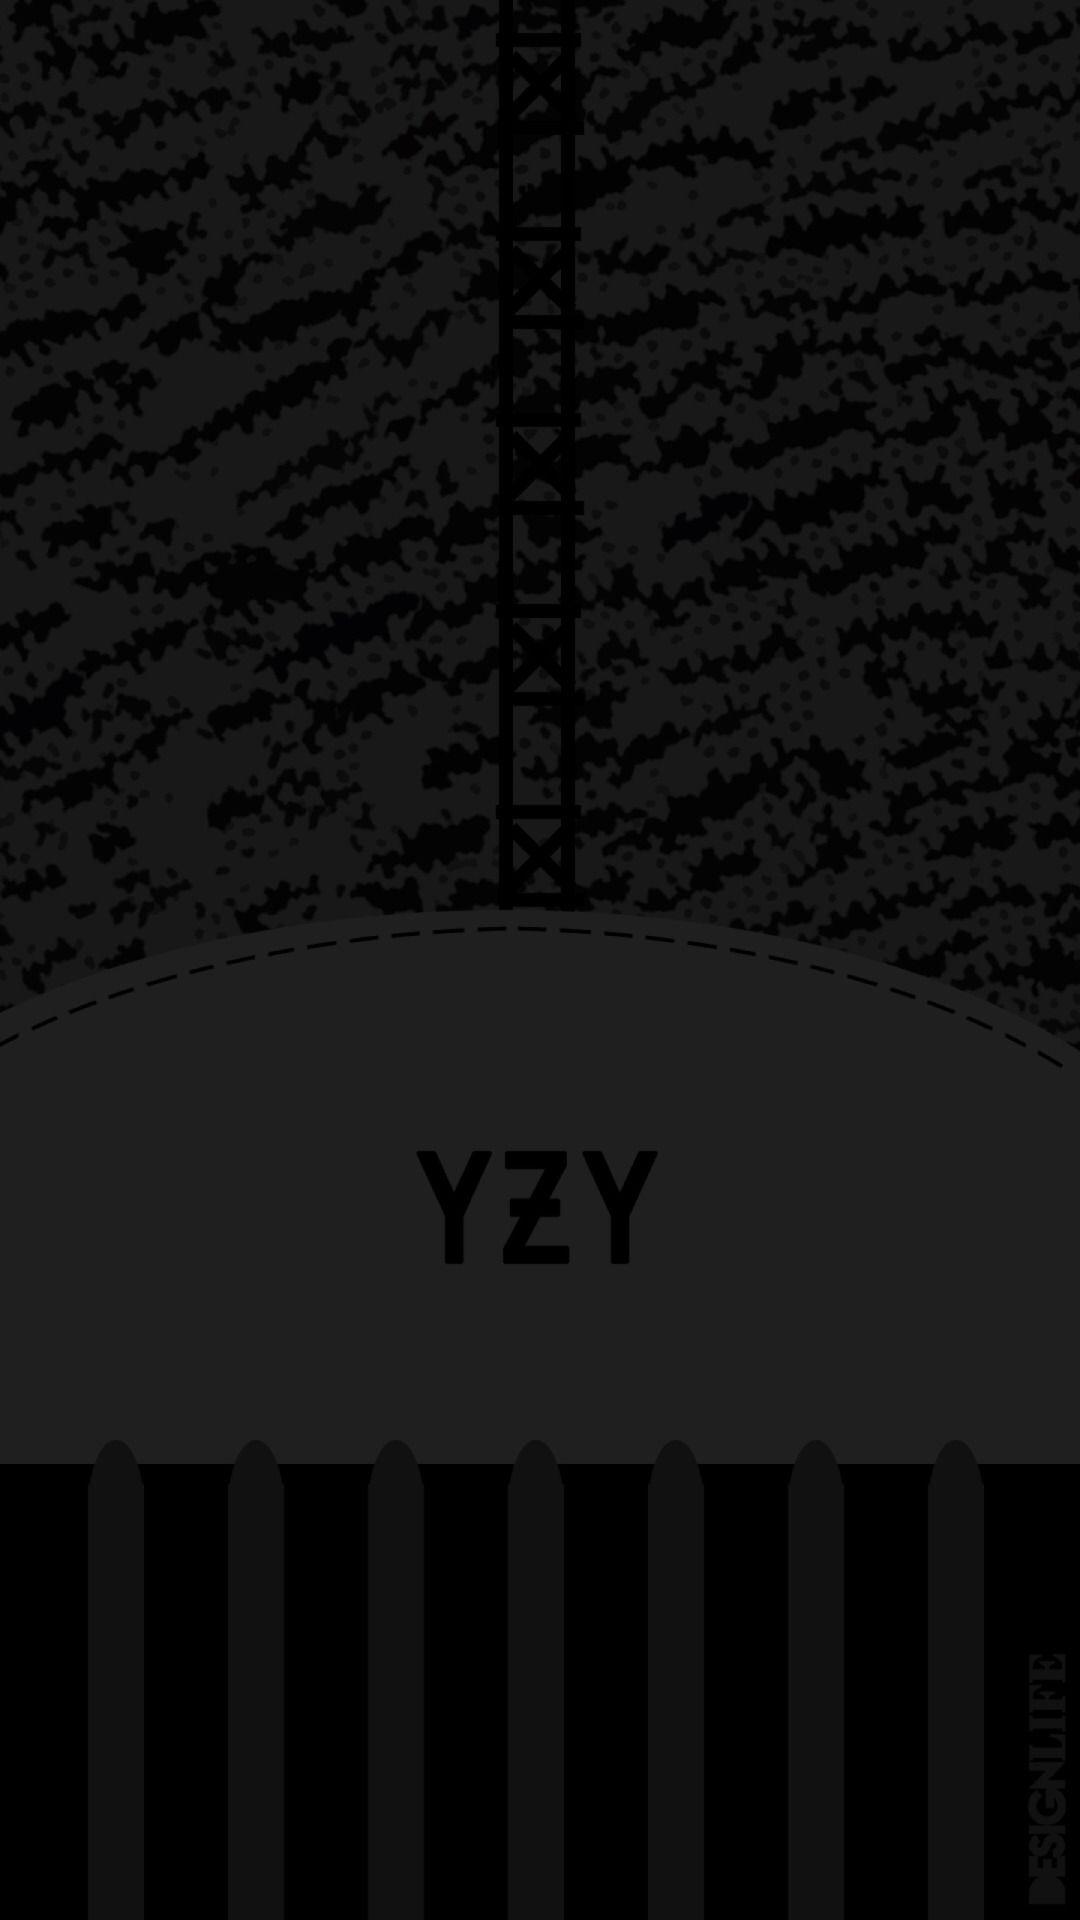 Yeezy Wallpapers - Top Free Yeezy